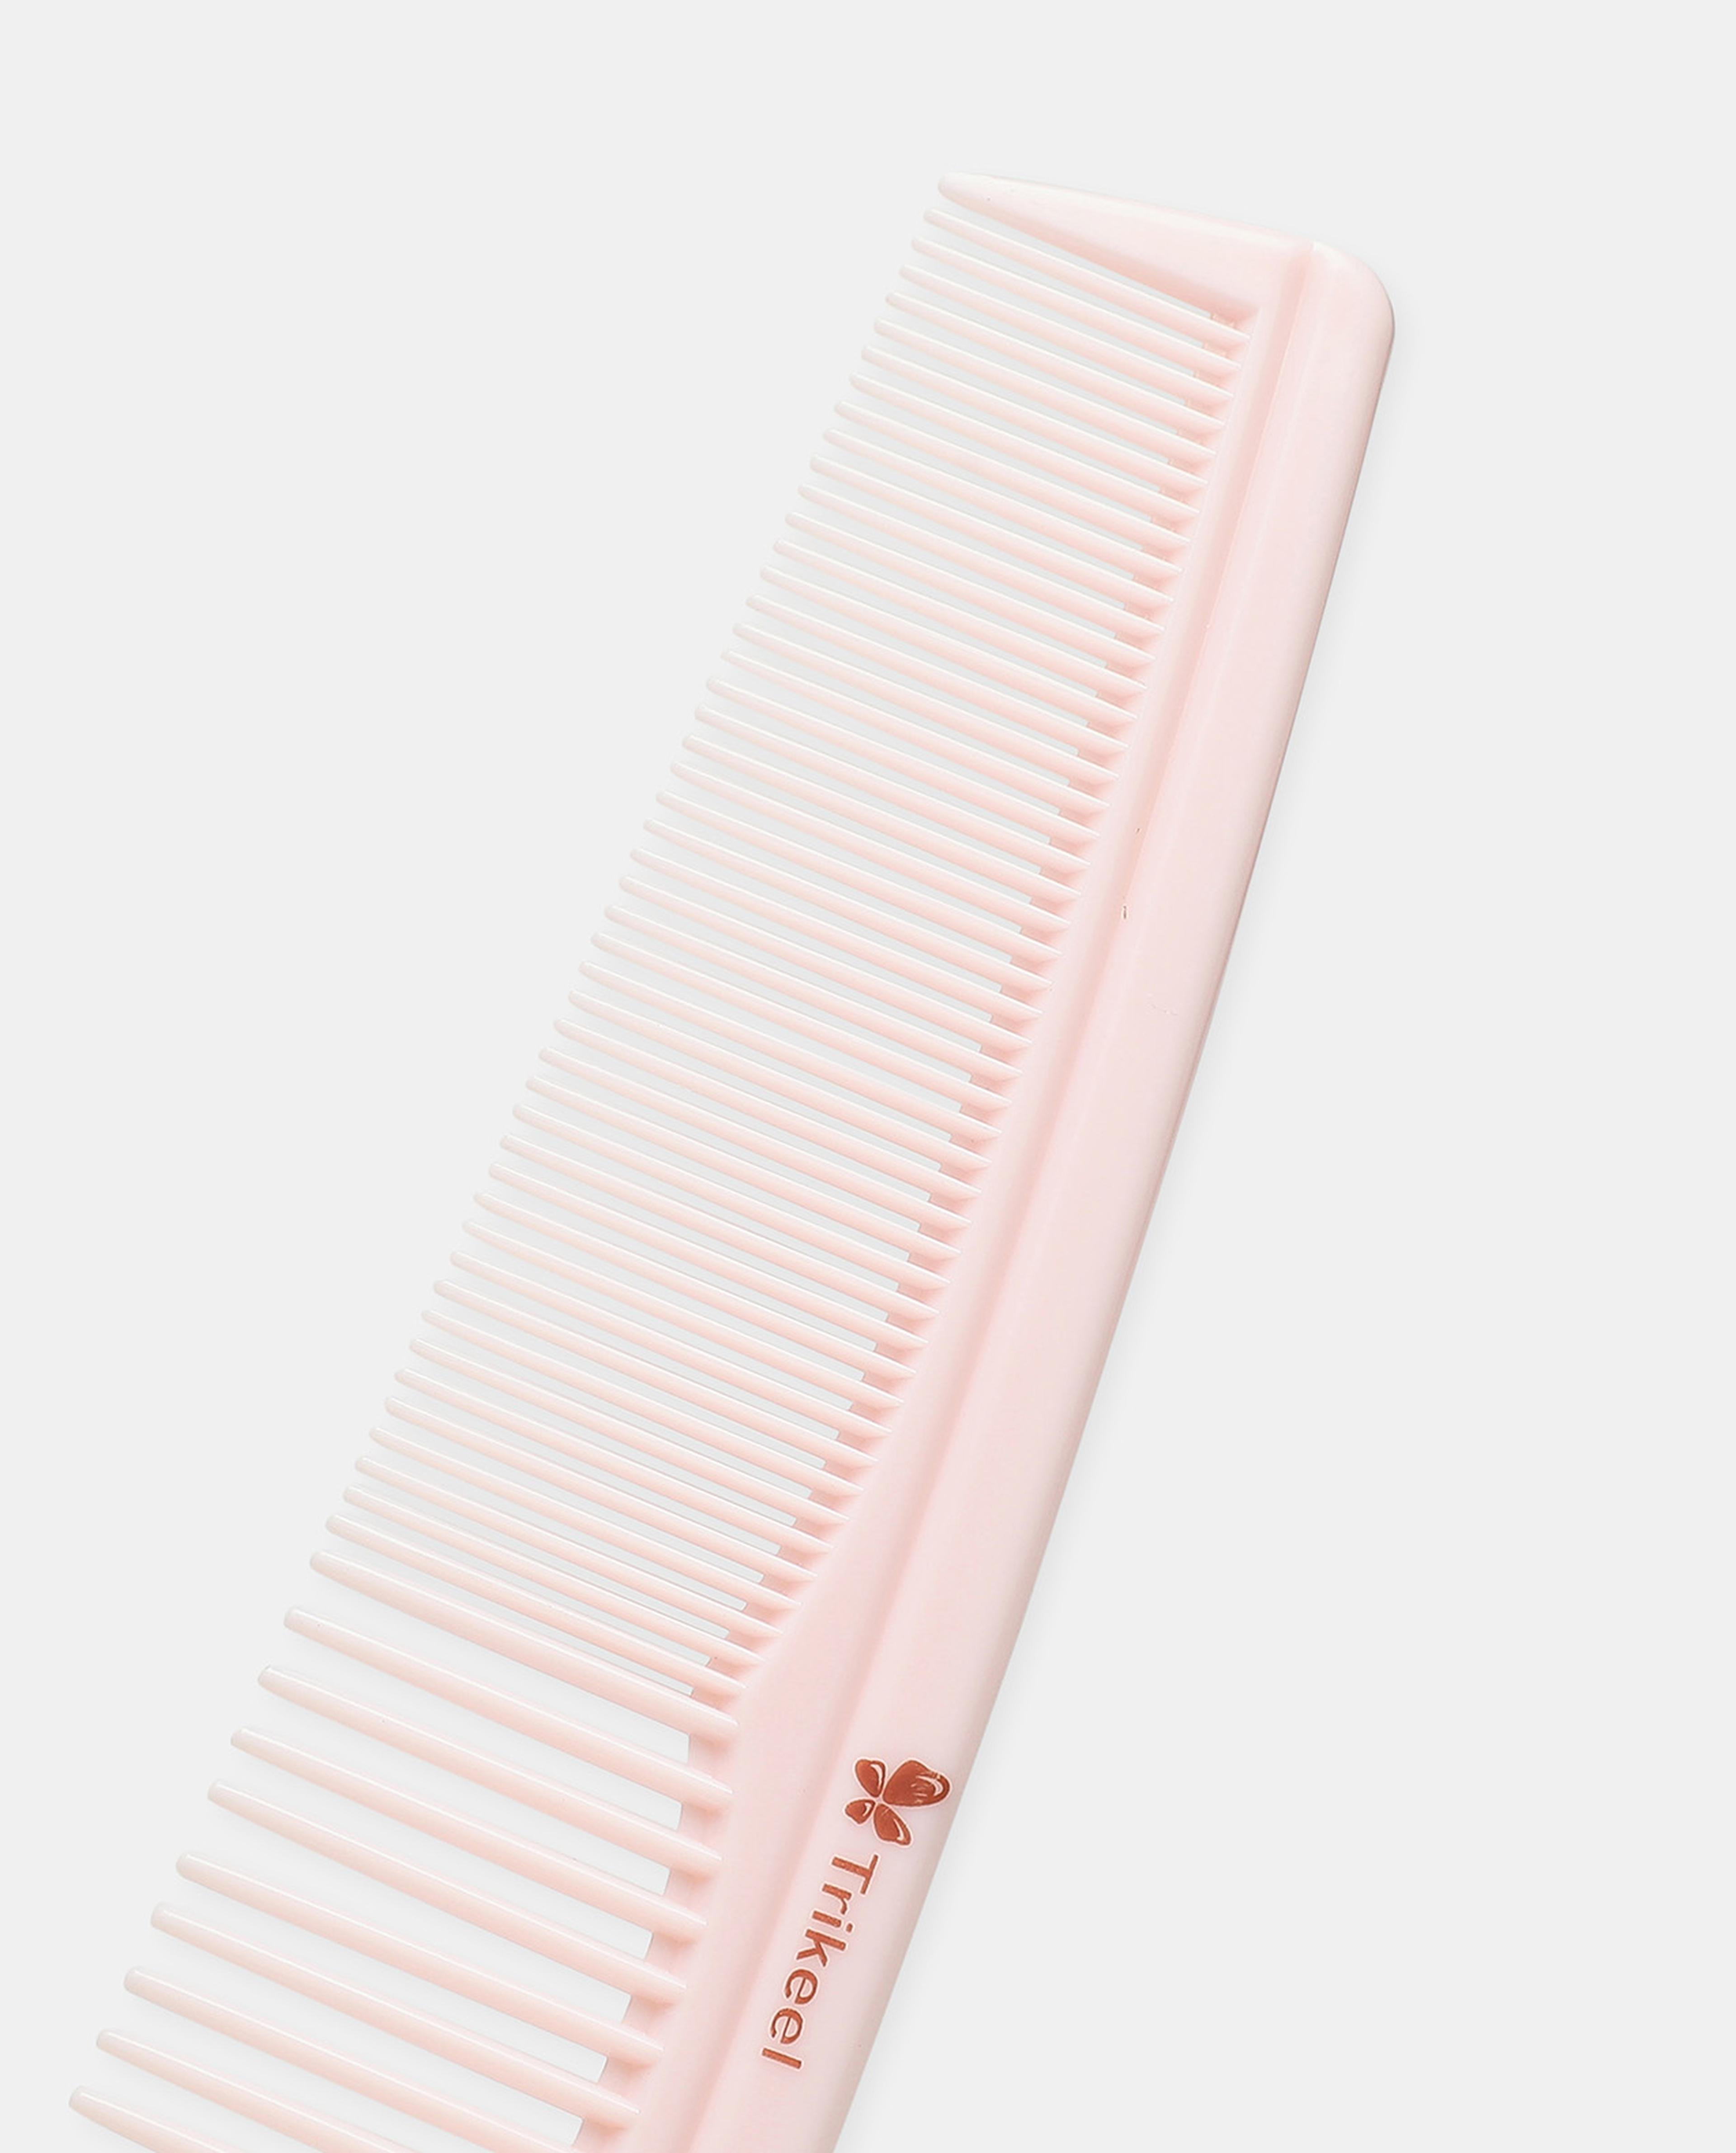 Sleek & Wide Tooth Hair Comb